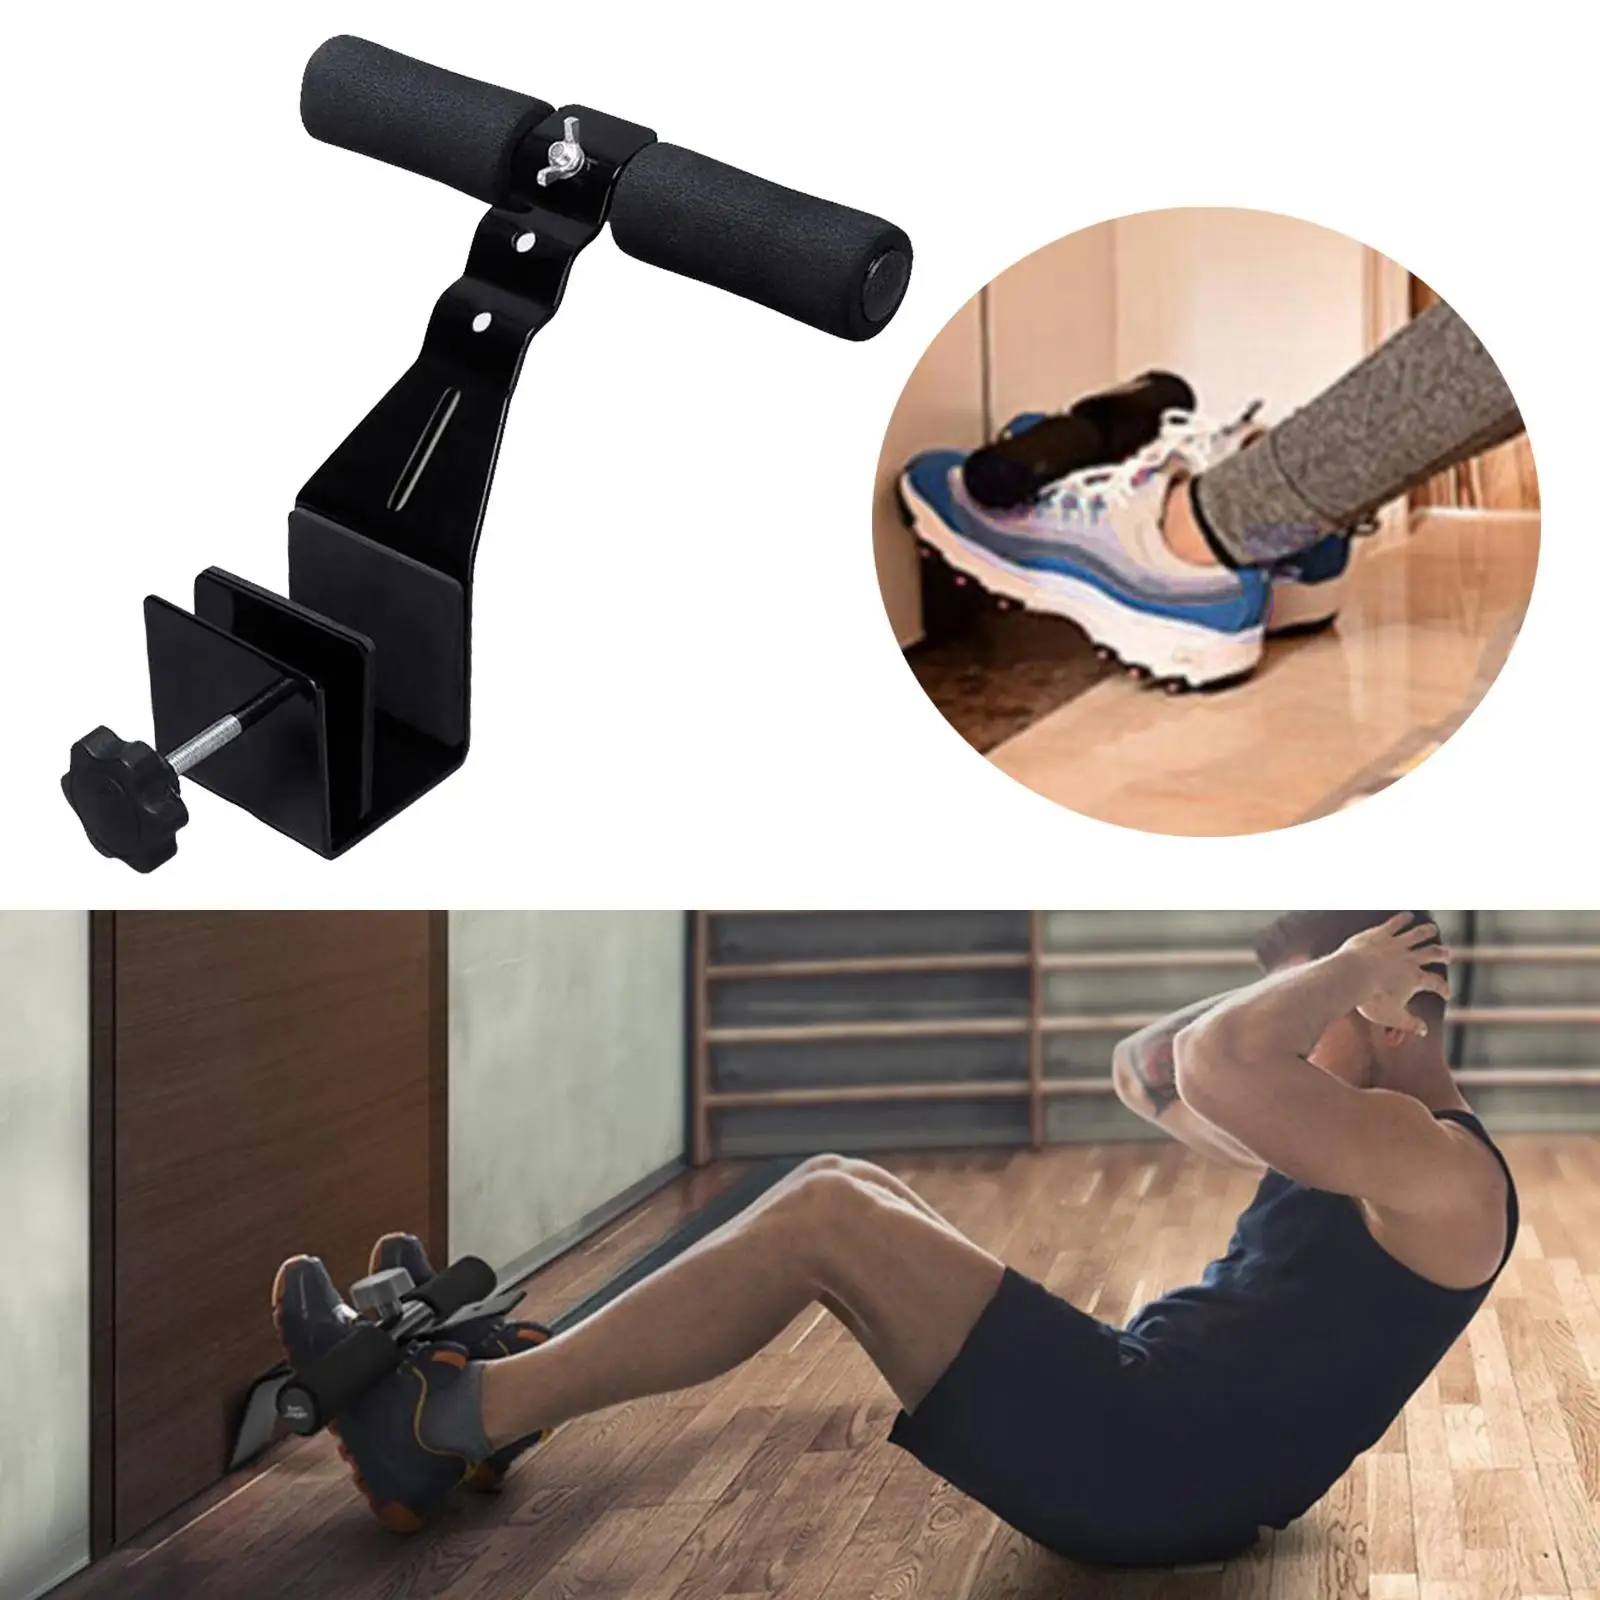 Adjustable Portable Black Sit up Bar Doorway Equipment for Gym Workout Home